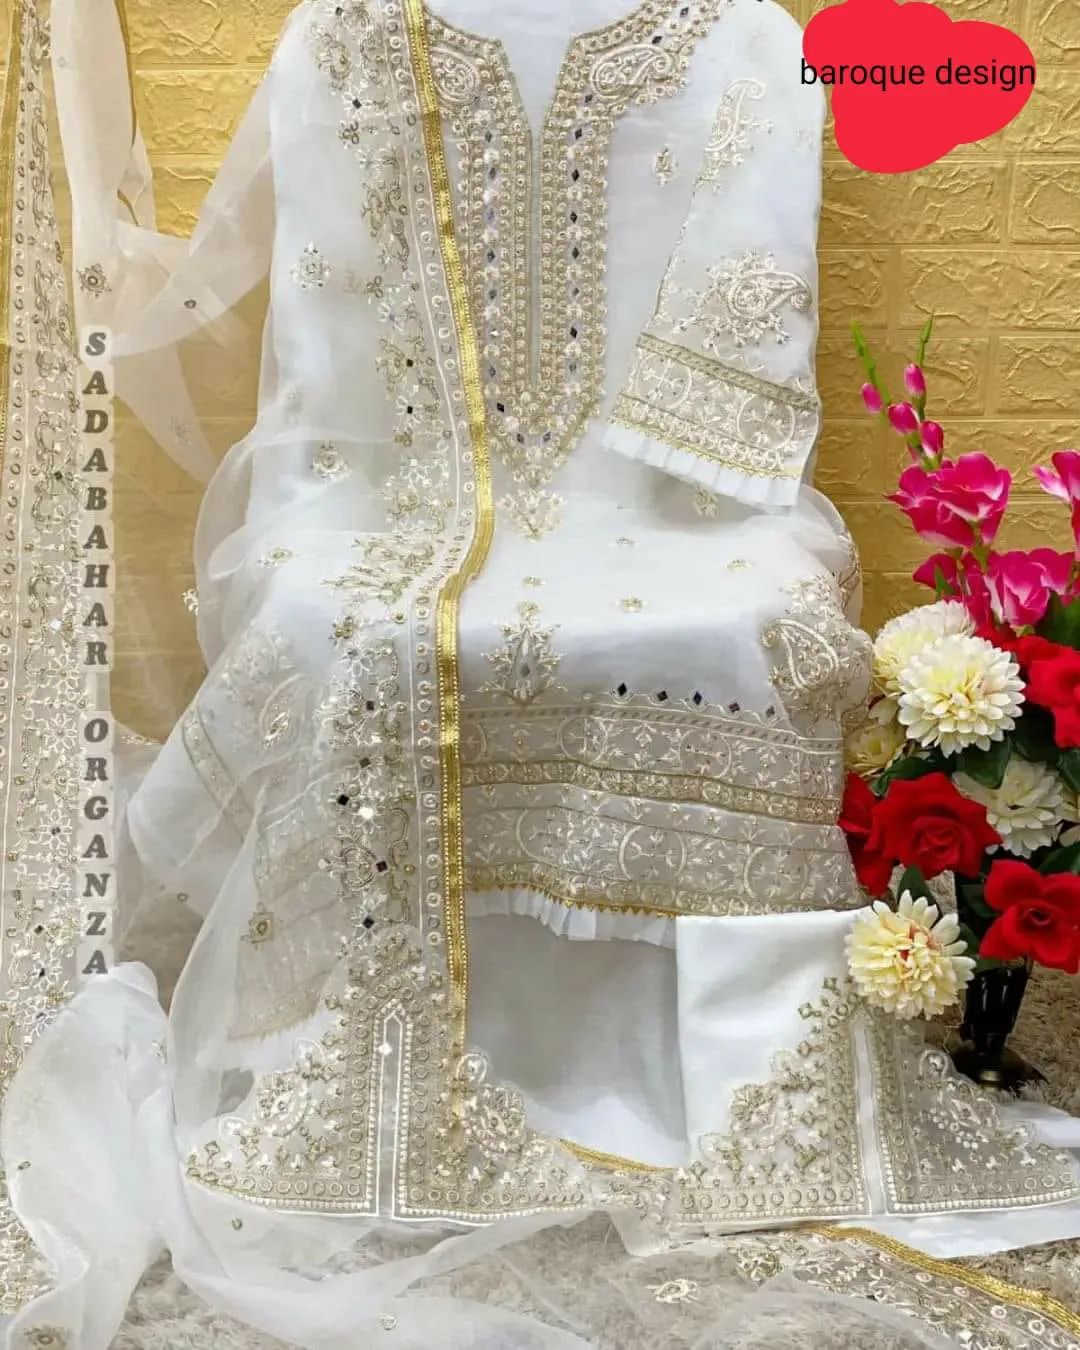 Baroque Design Pakistani Suits in White Colour